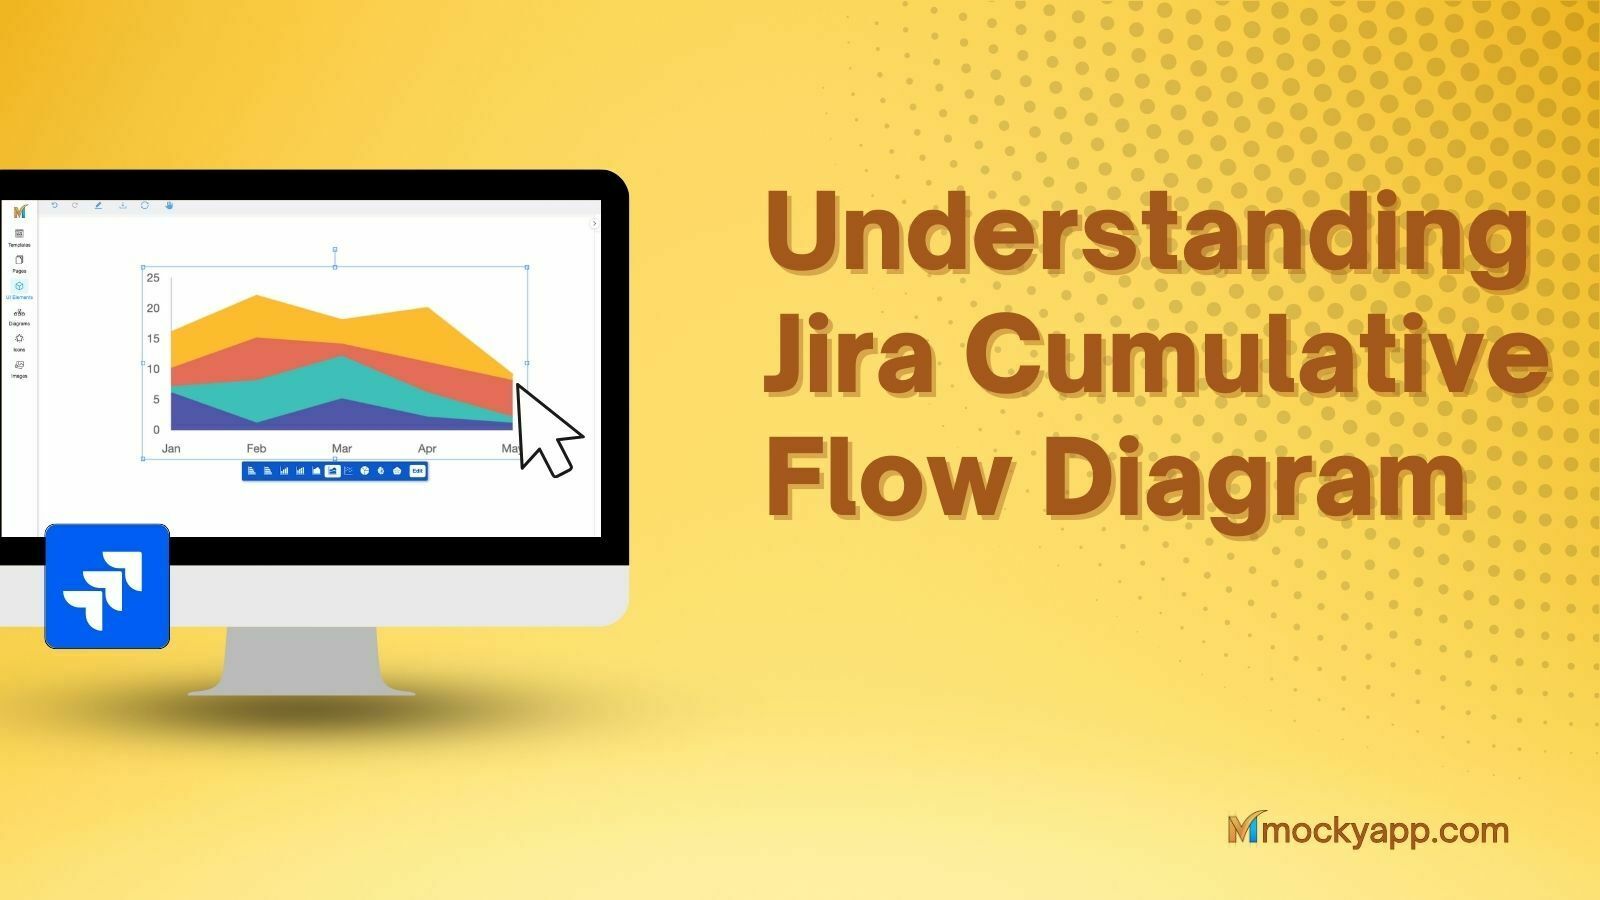 Jira Cumulative Flow Diagram: A complete understanding